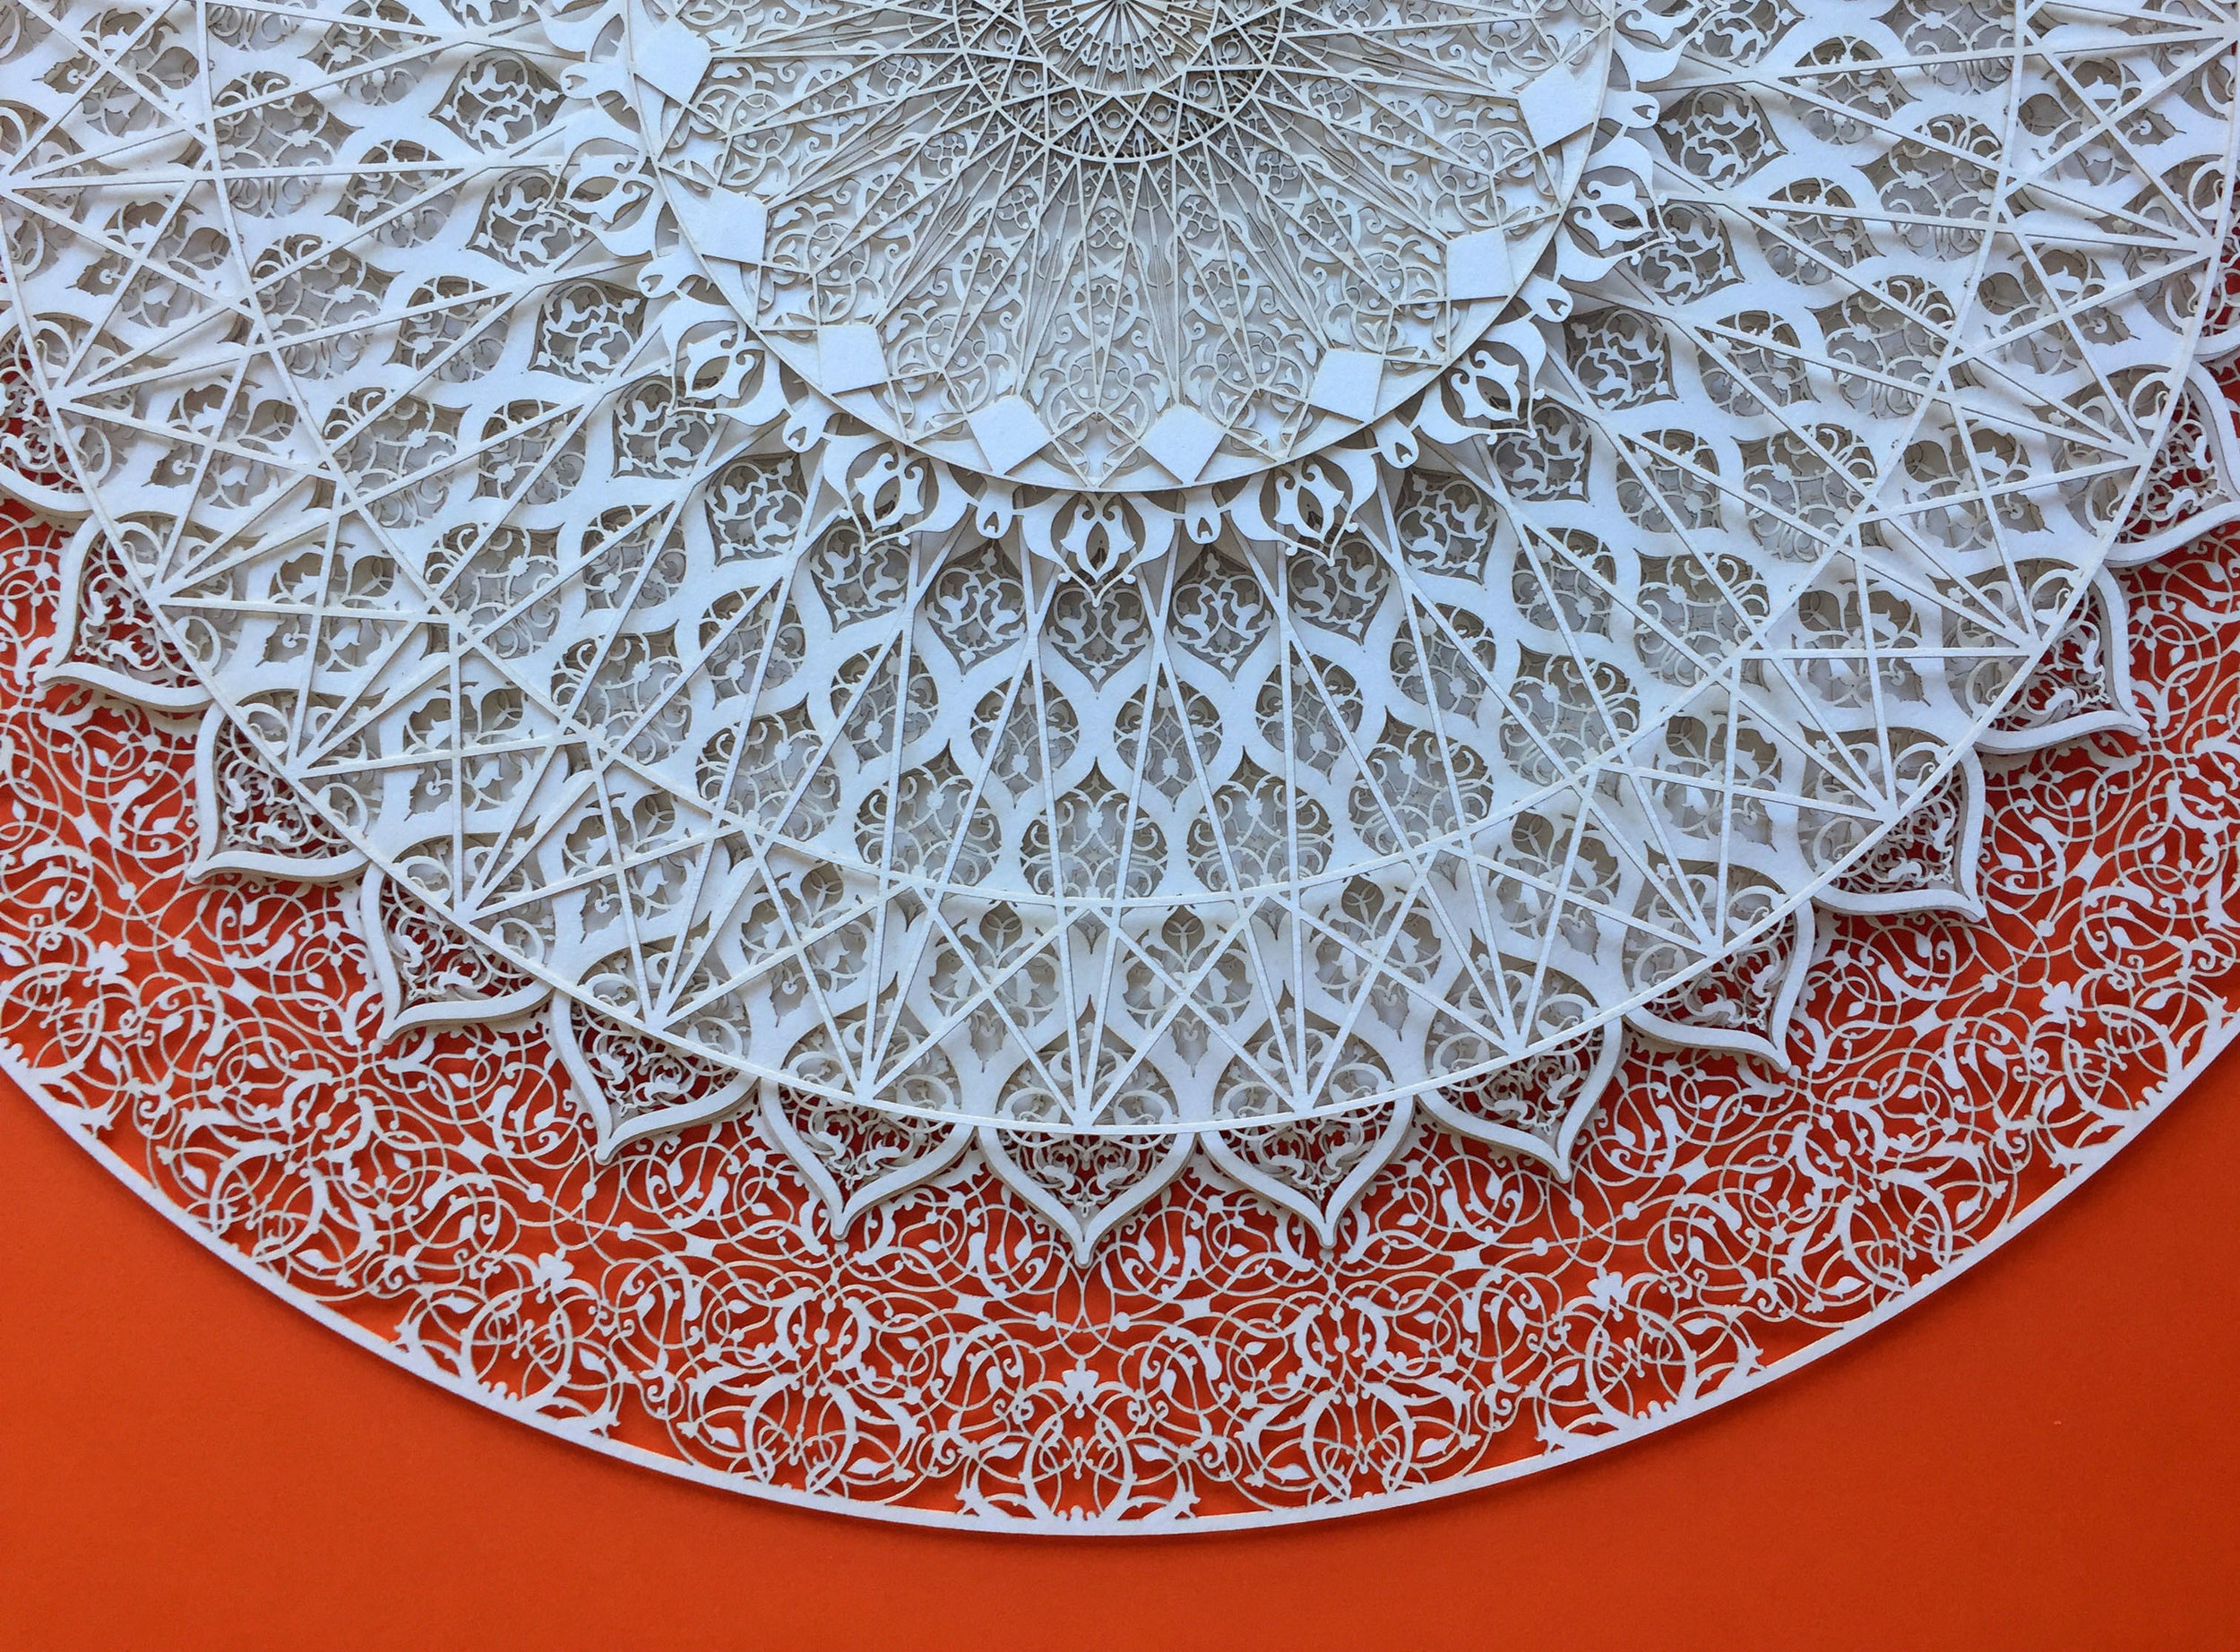 Julia Ibbini laser cut art - white circle against orange